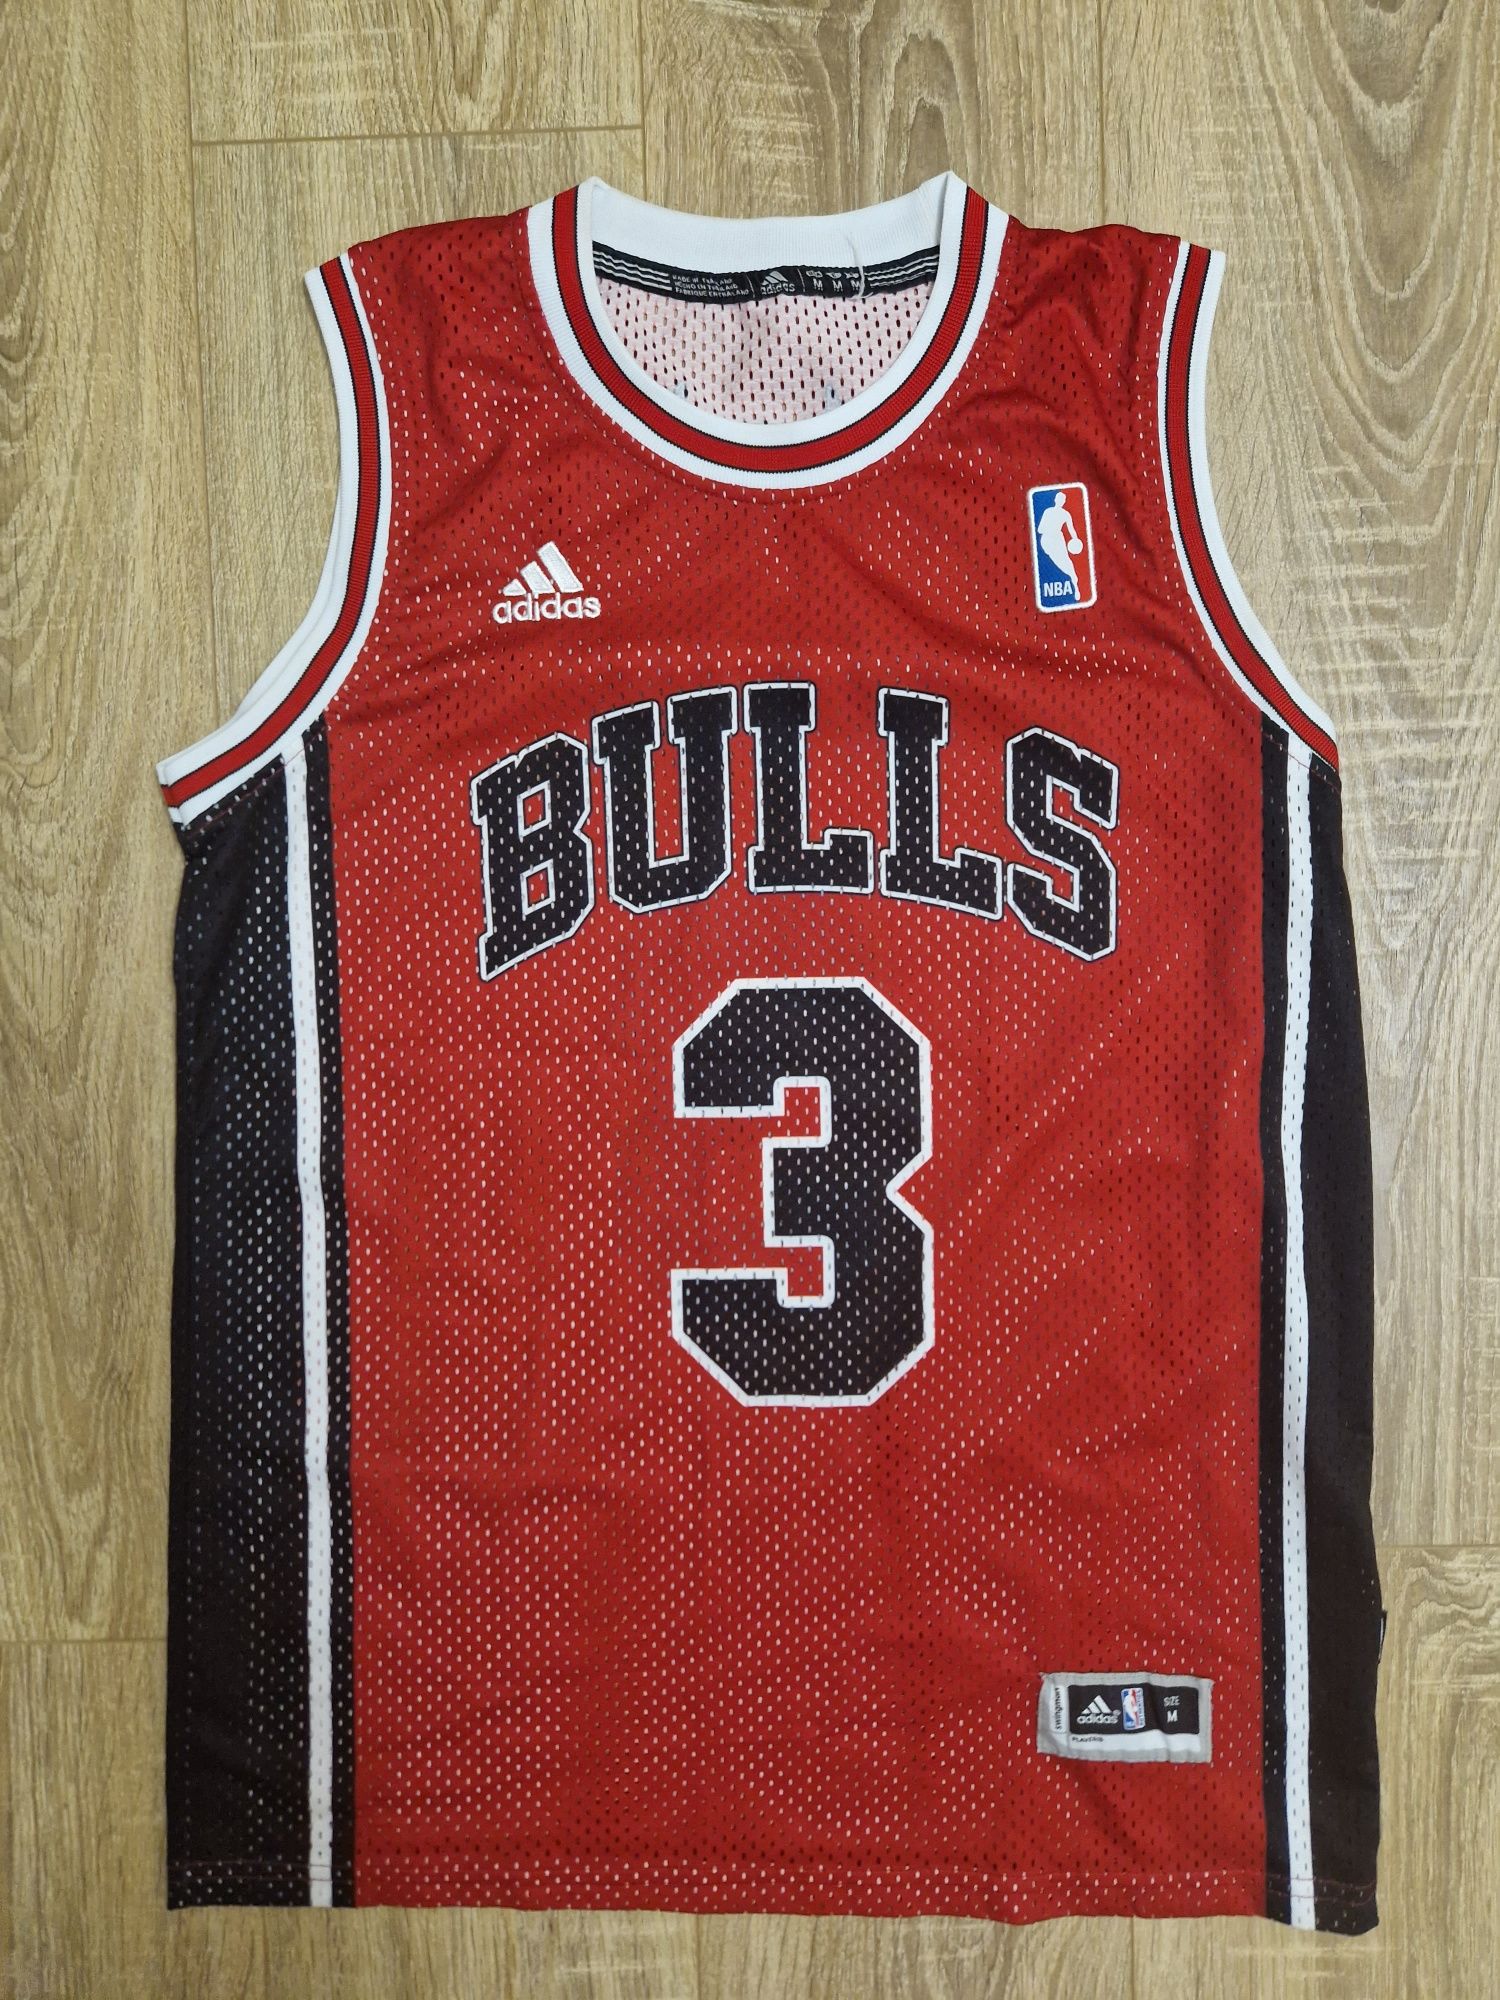 Chicago Bulls Dwayne Wade jersey